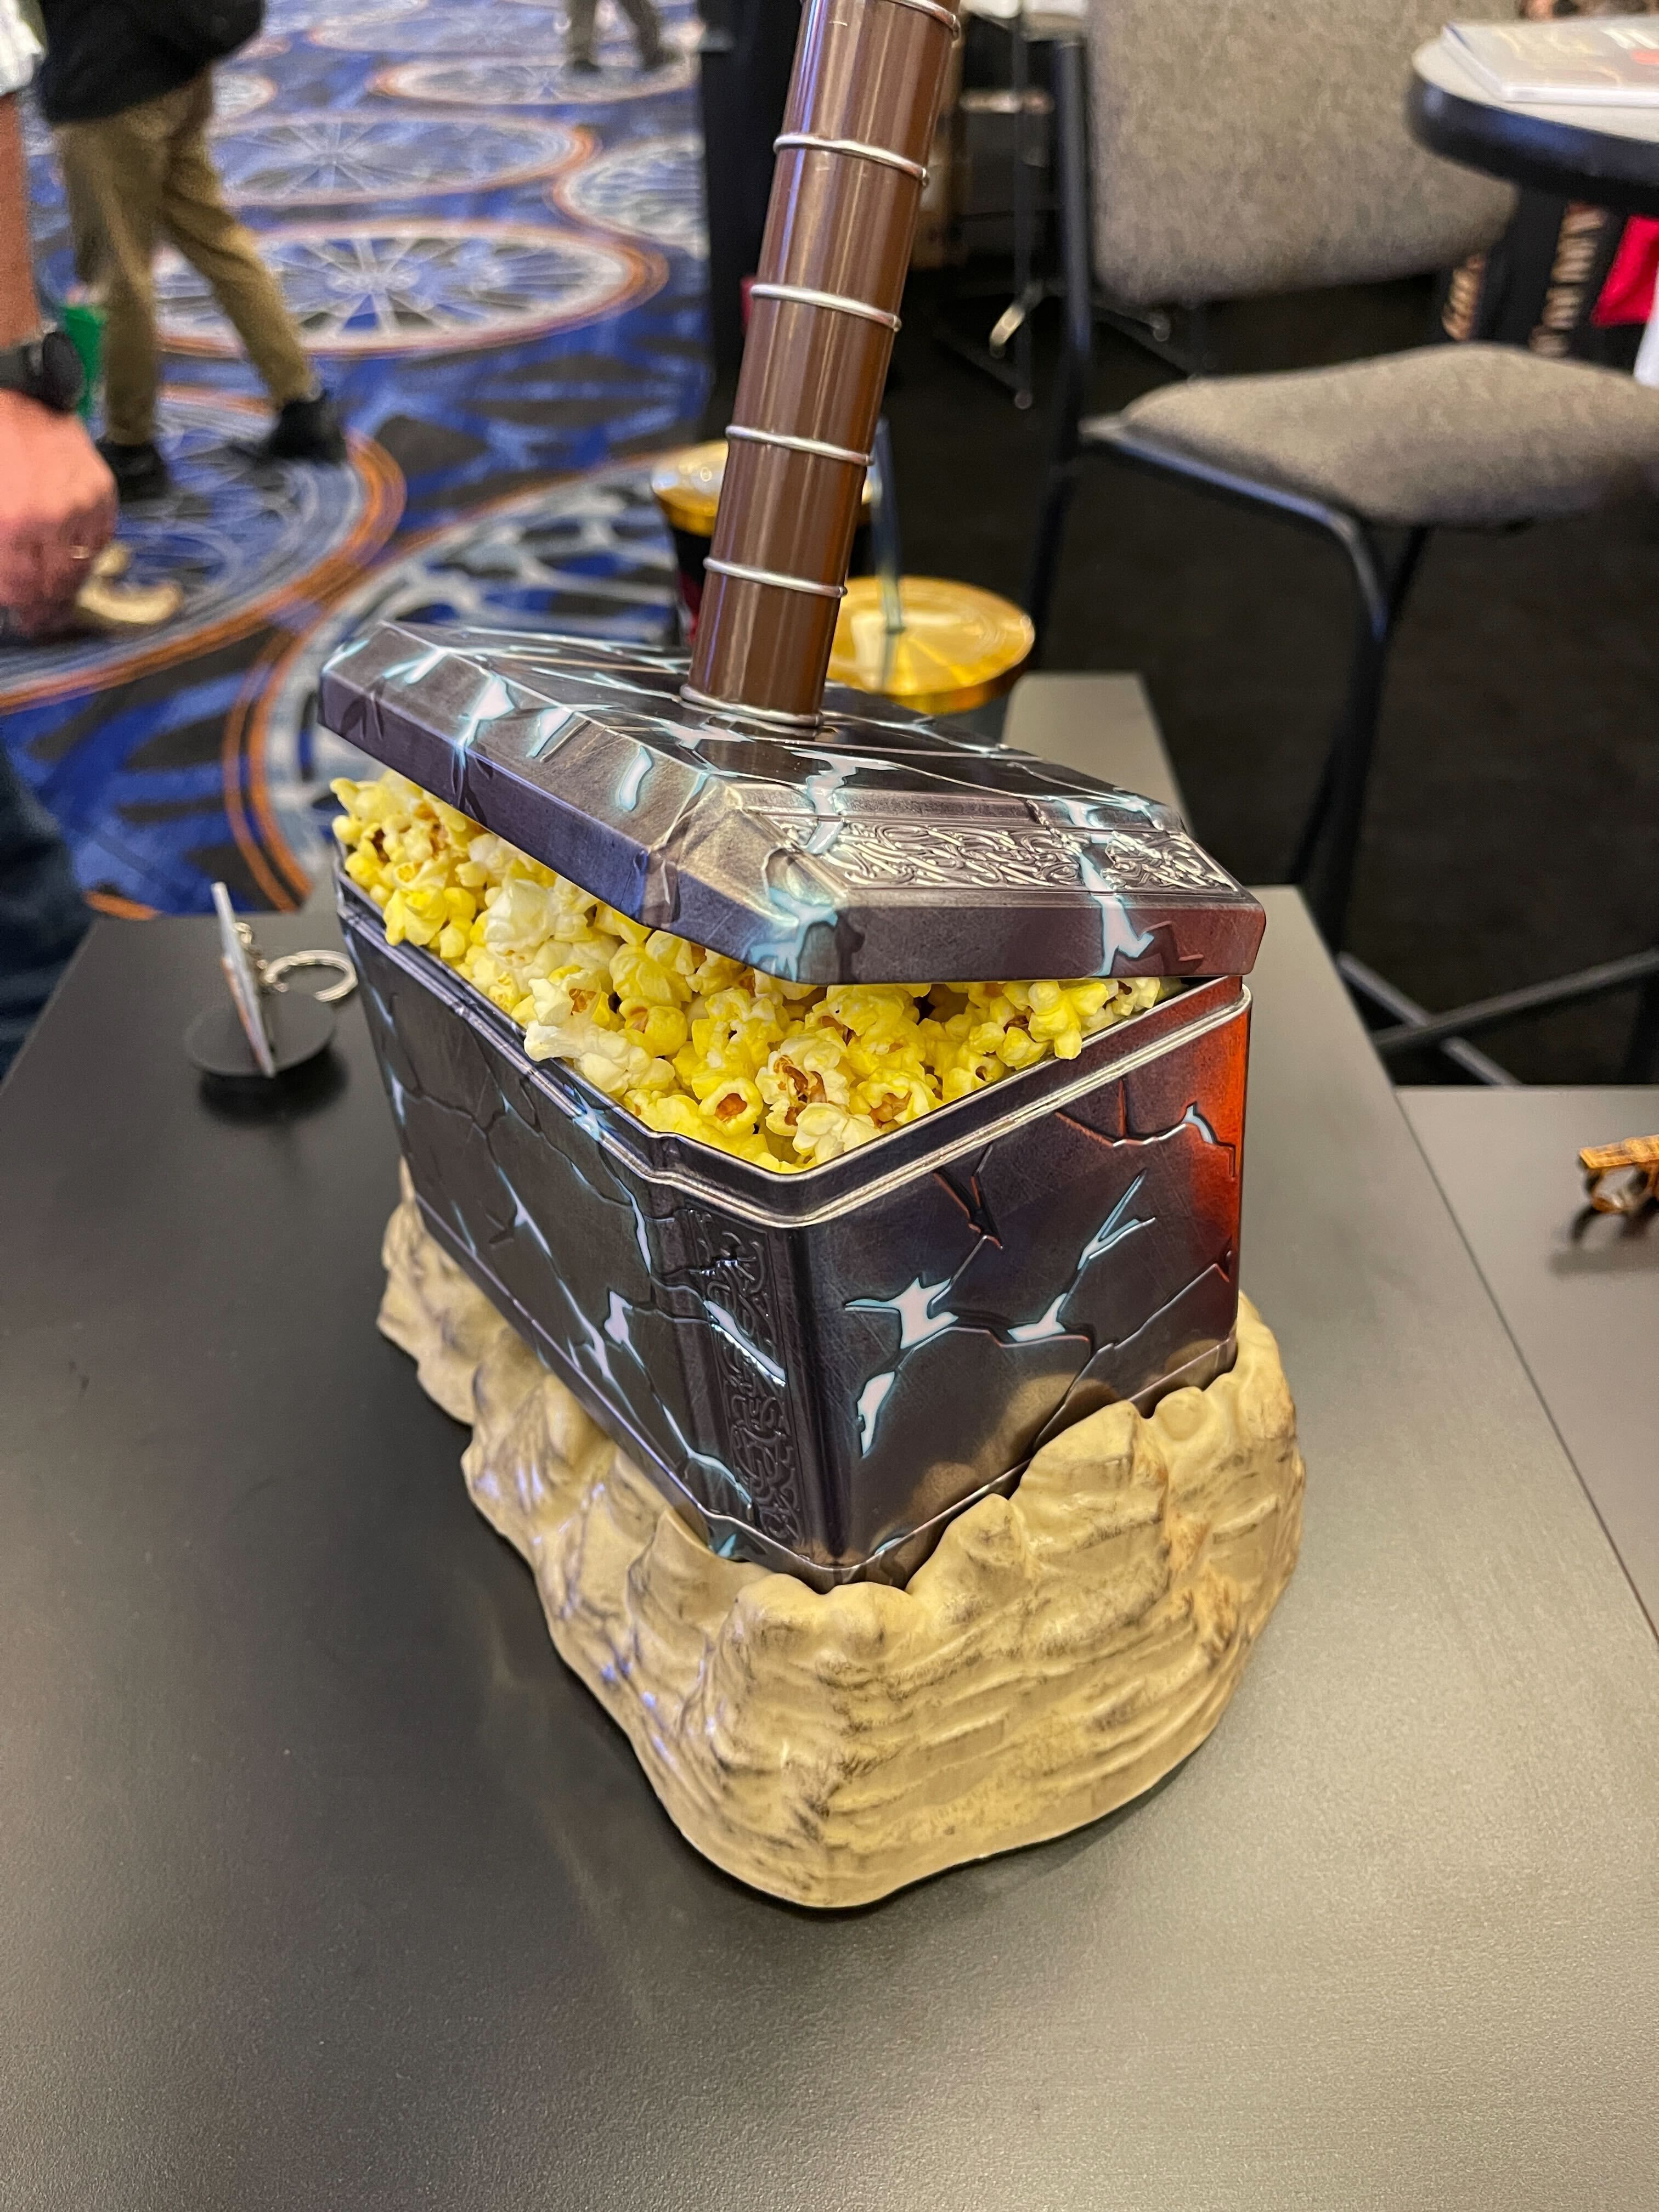 CinemaCon Popcorn Buckets